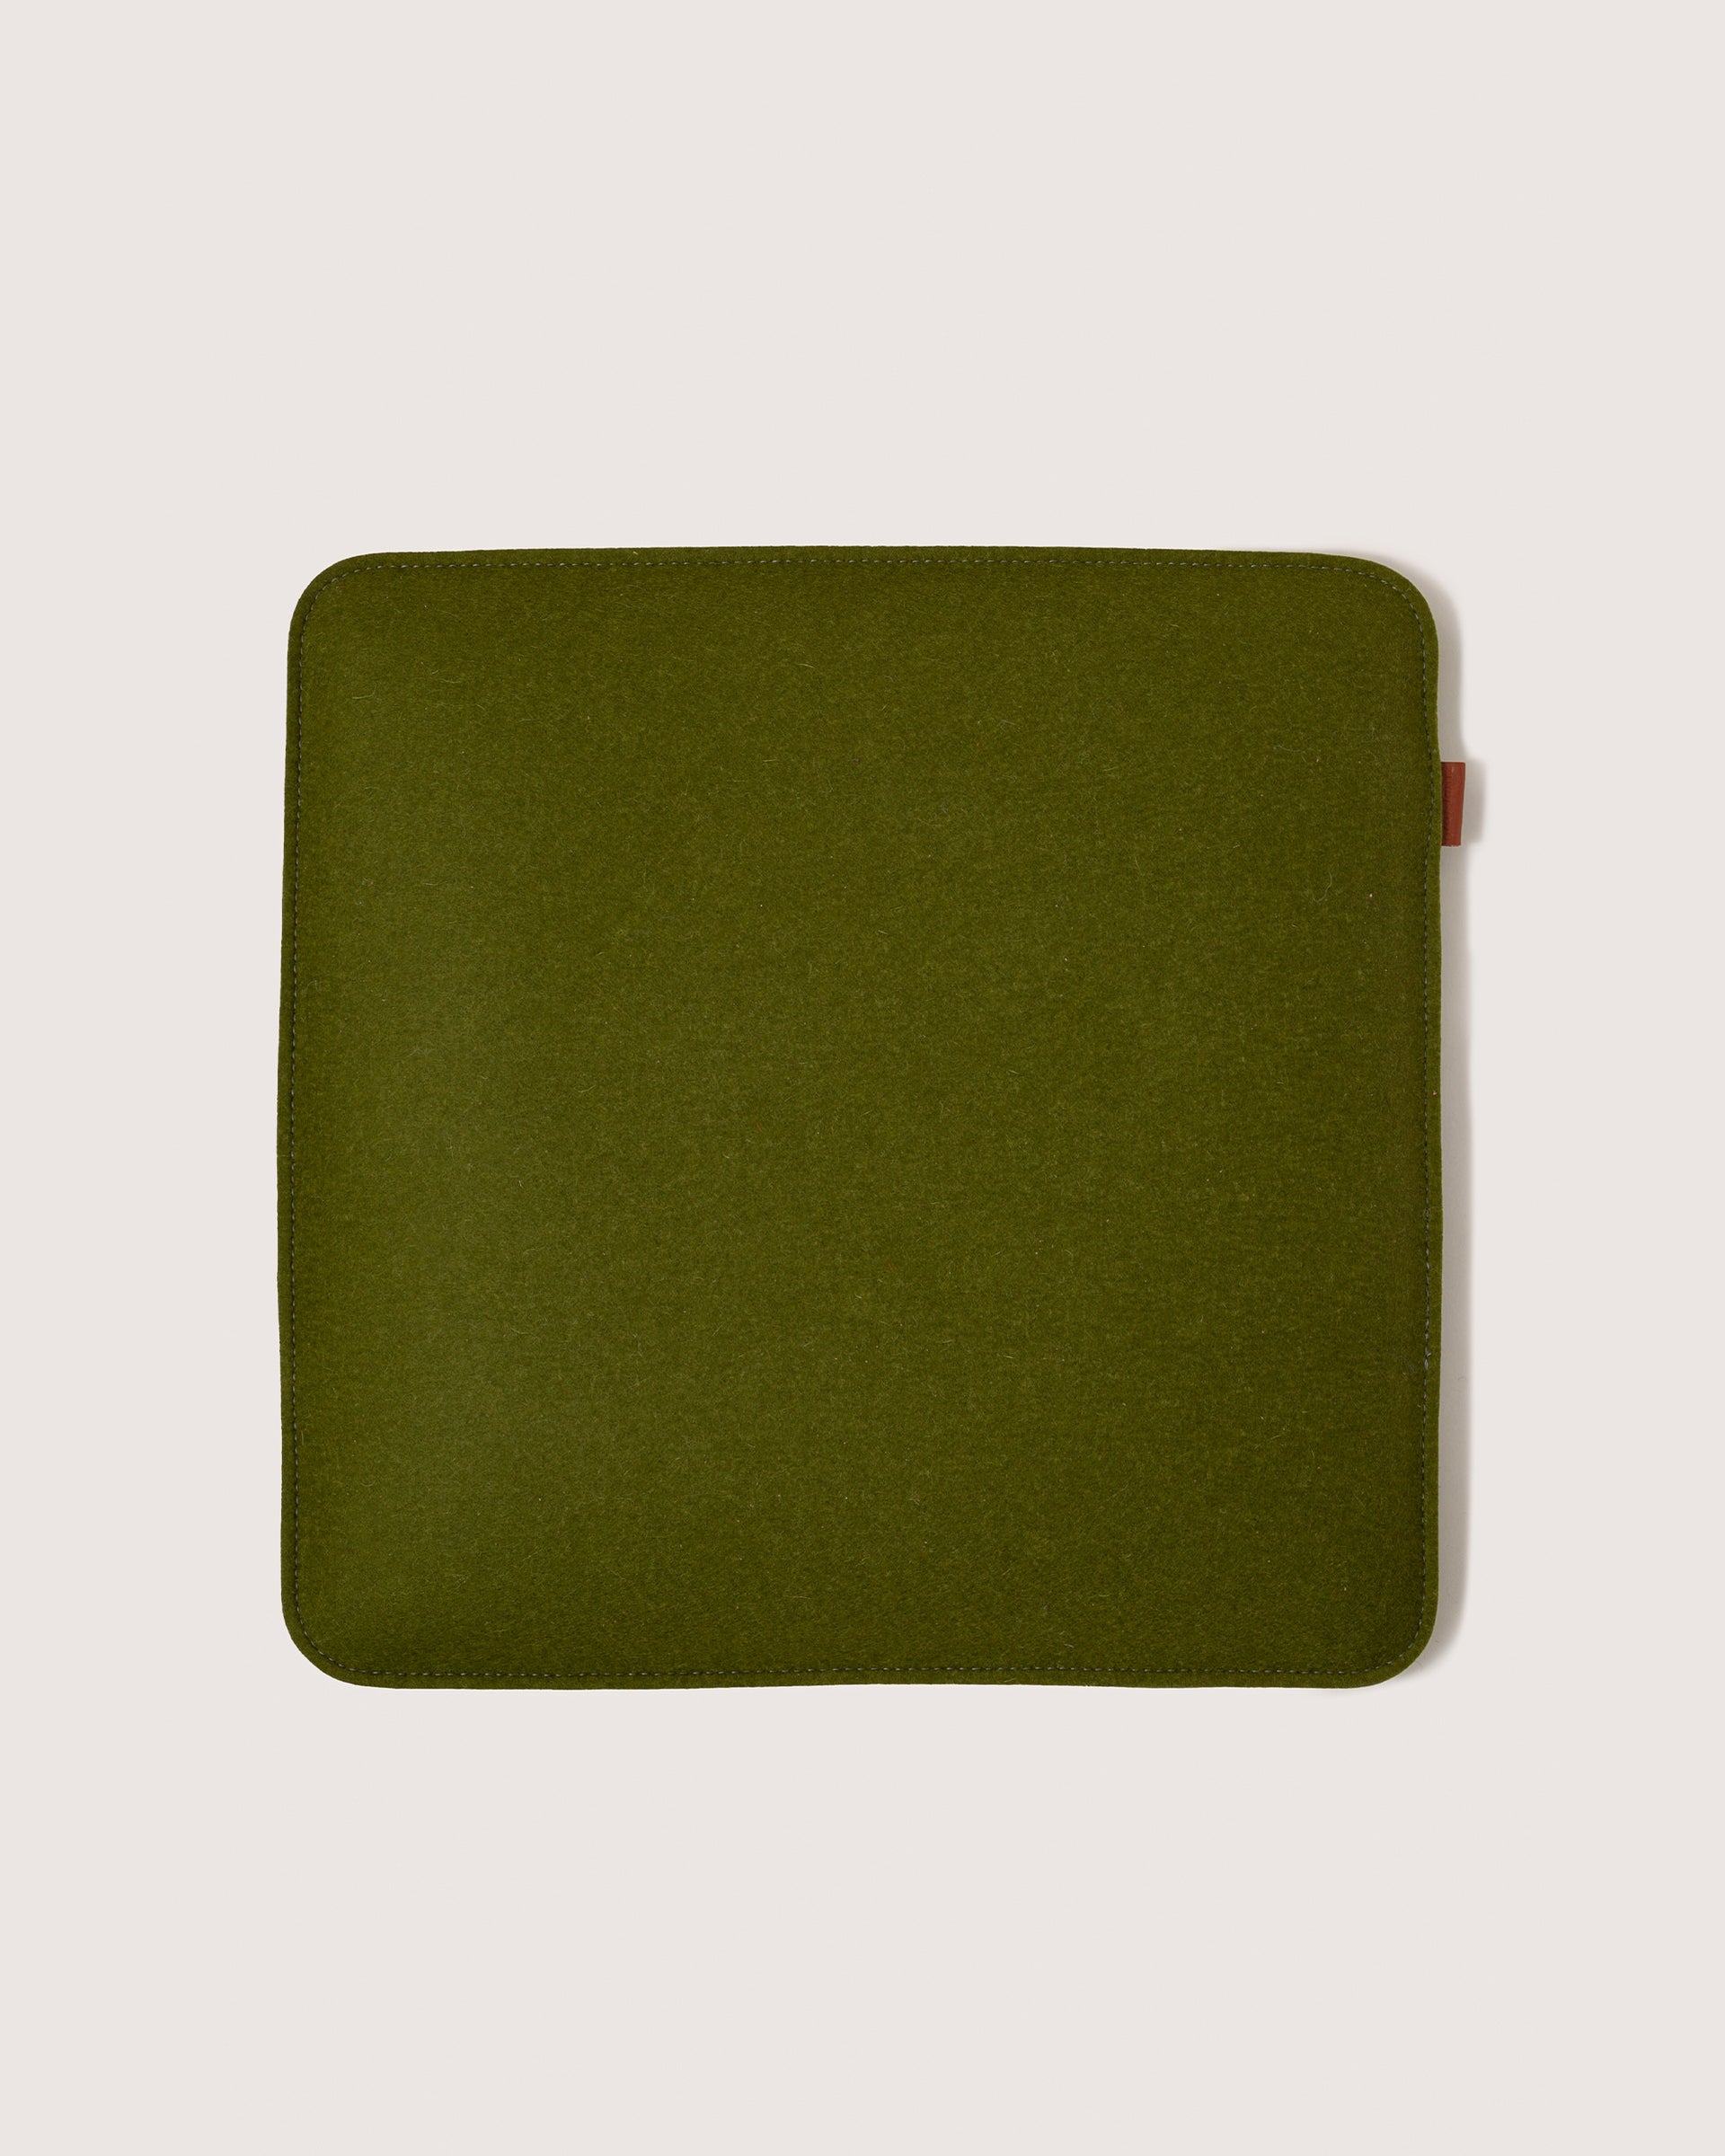 A Zabuton Merino Wool Felt Square Seat Pad by Graf Lantz in Moss Sienna, white background